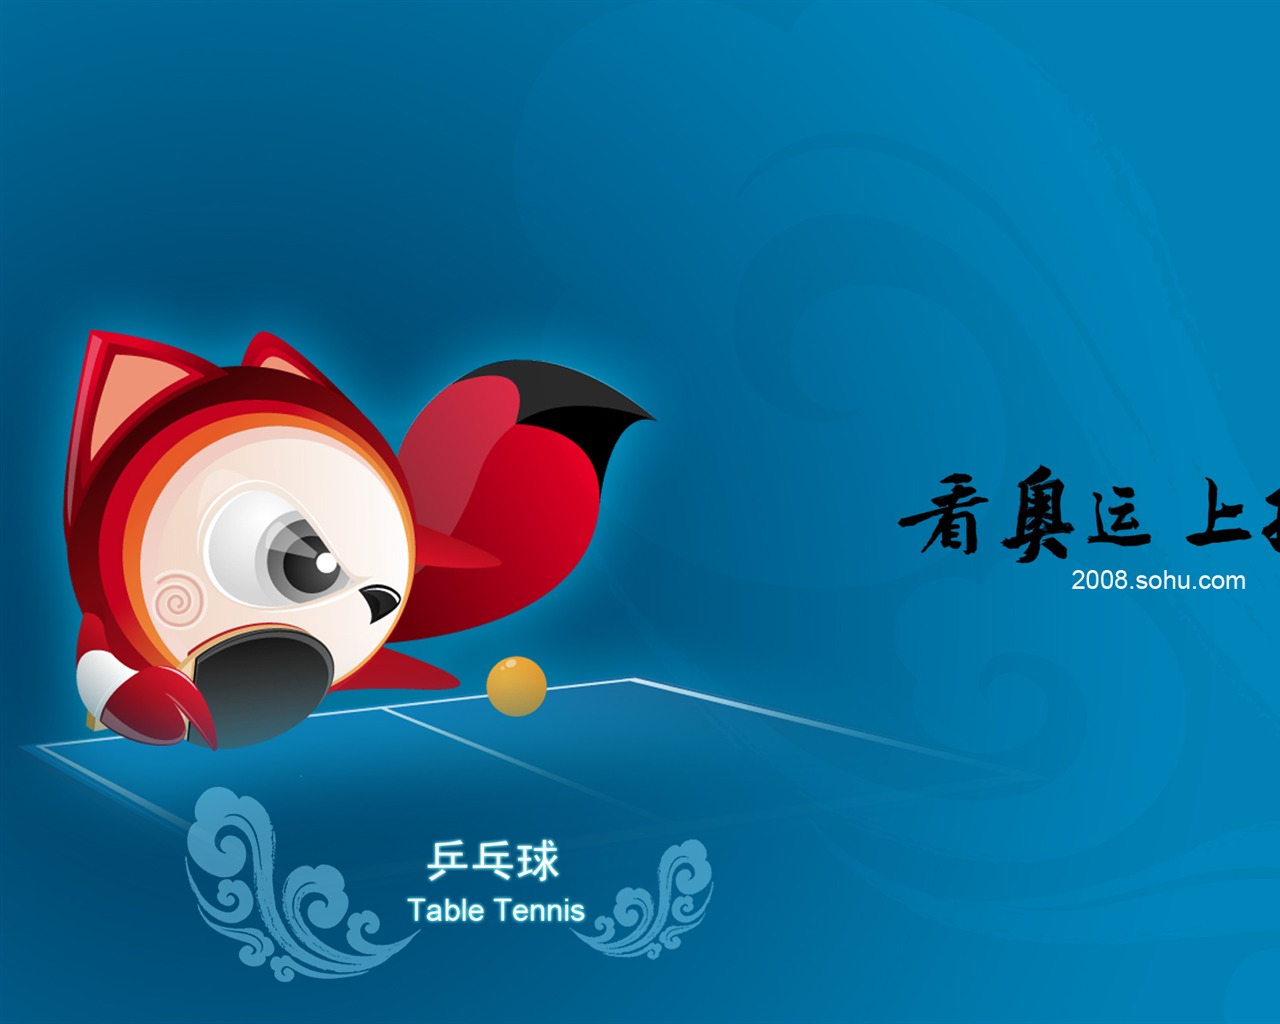 Sohu Olympic sports style wallpaper #27 - 1280x1024